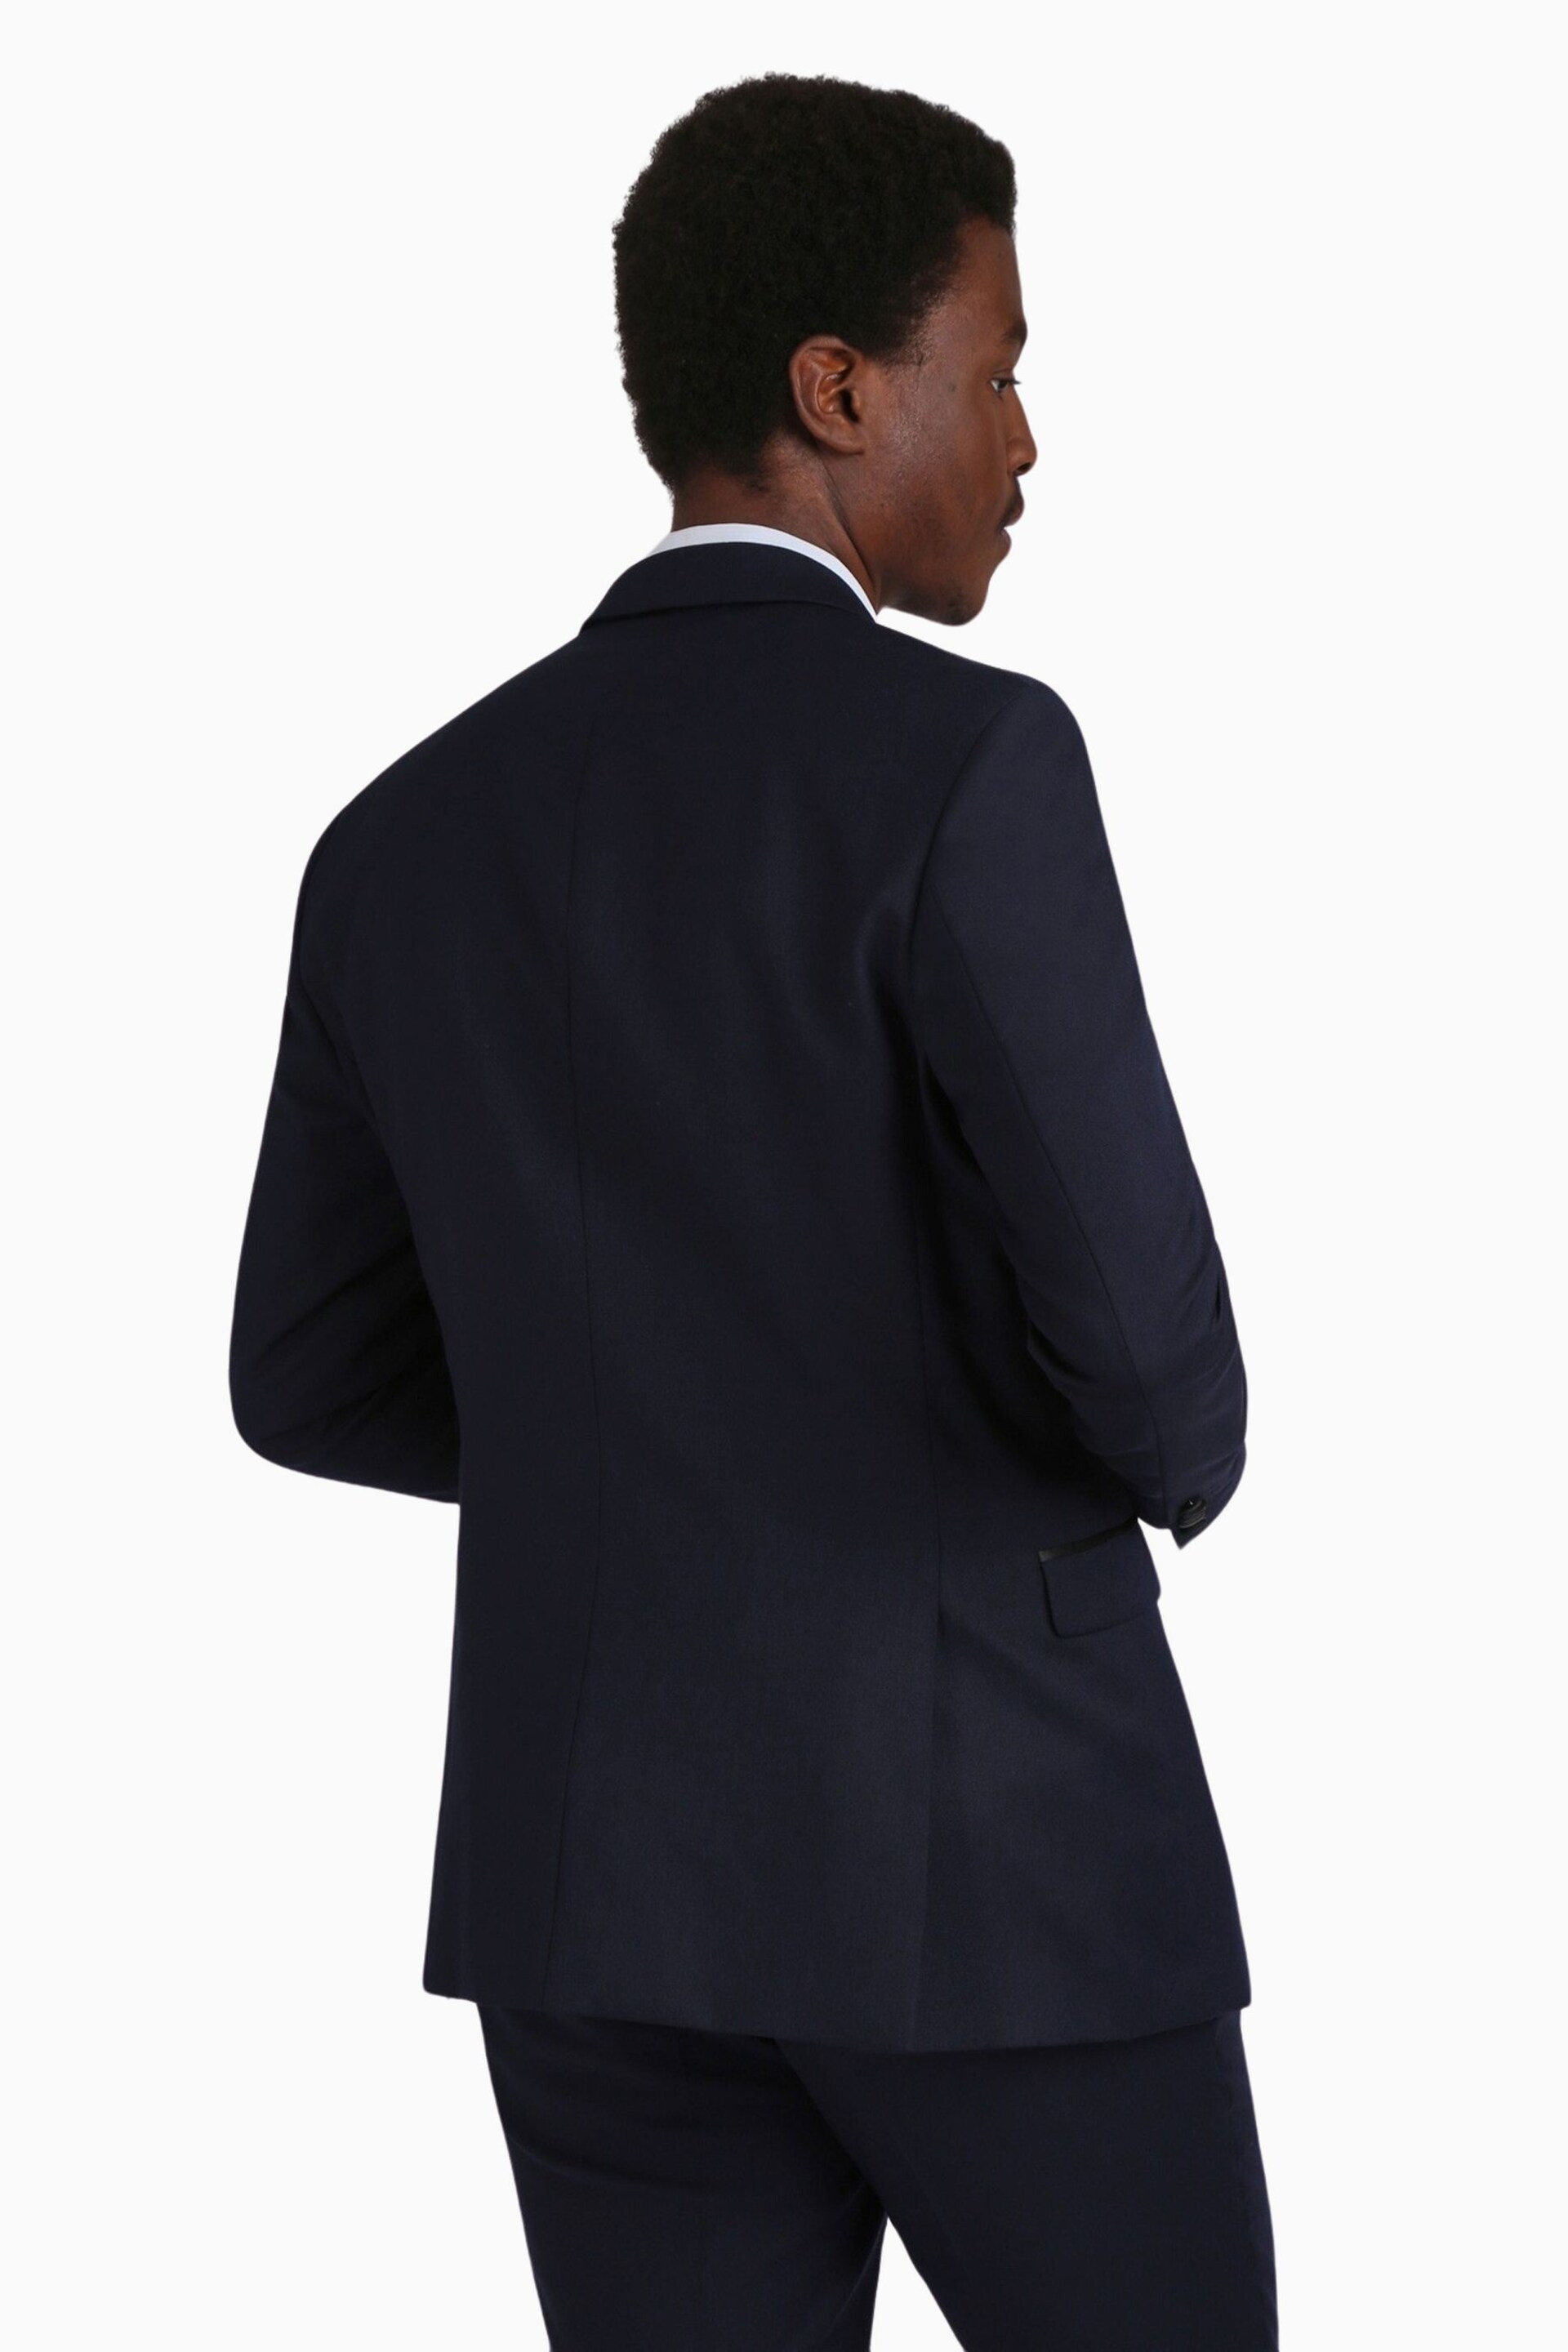 Ted Baker Tailoring Blue Slim Fit Tuxedo Jacket - Image 2 of 6